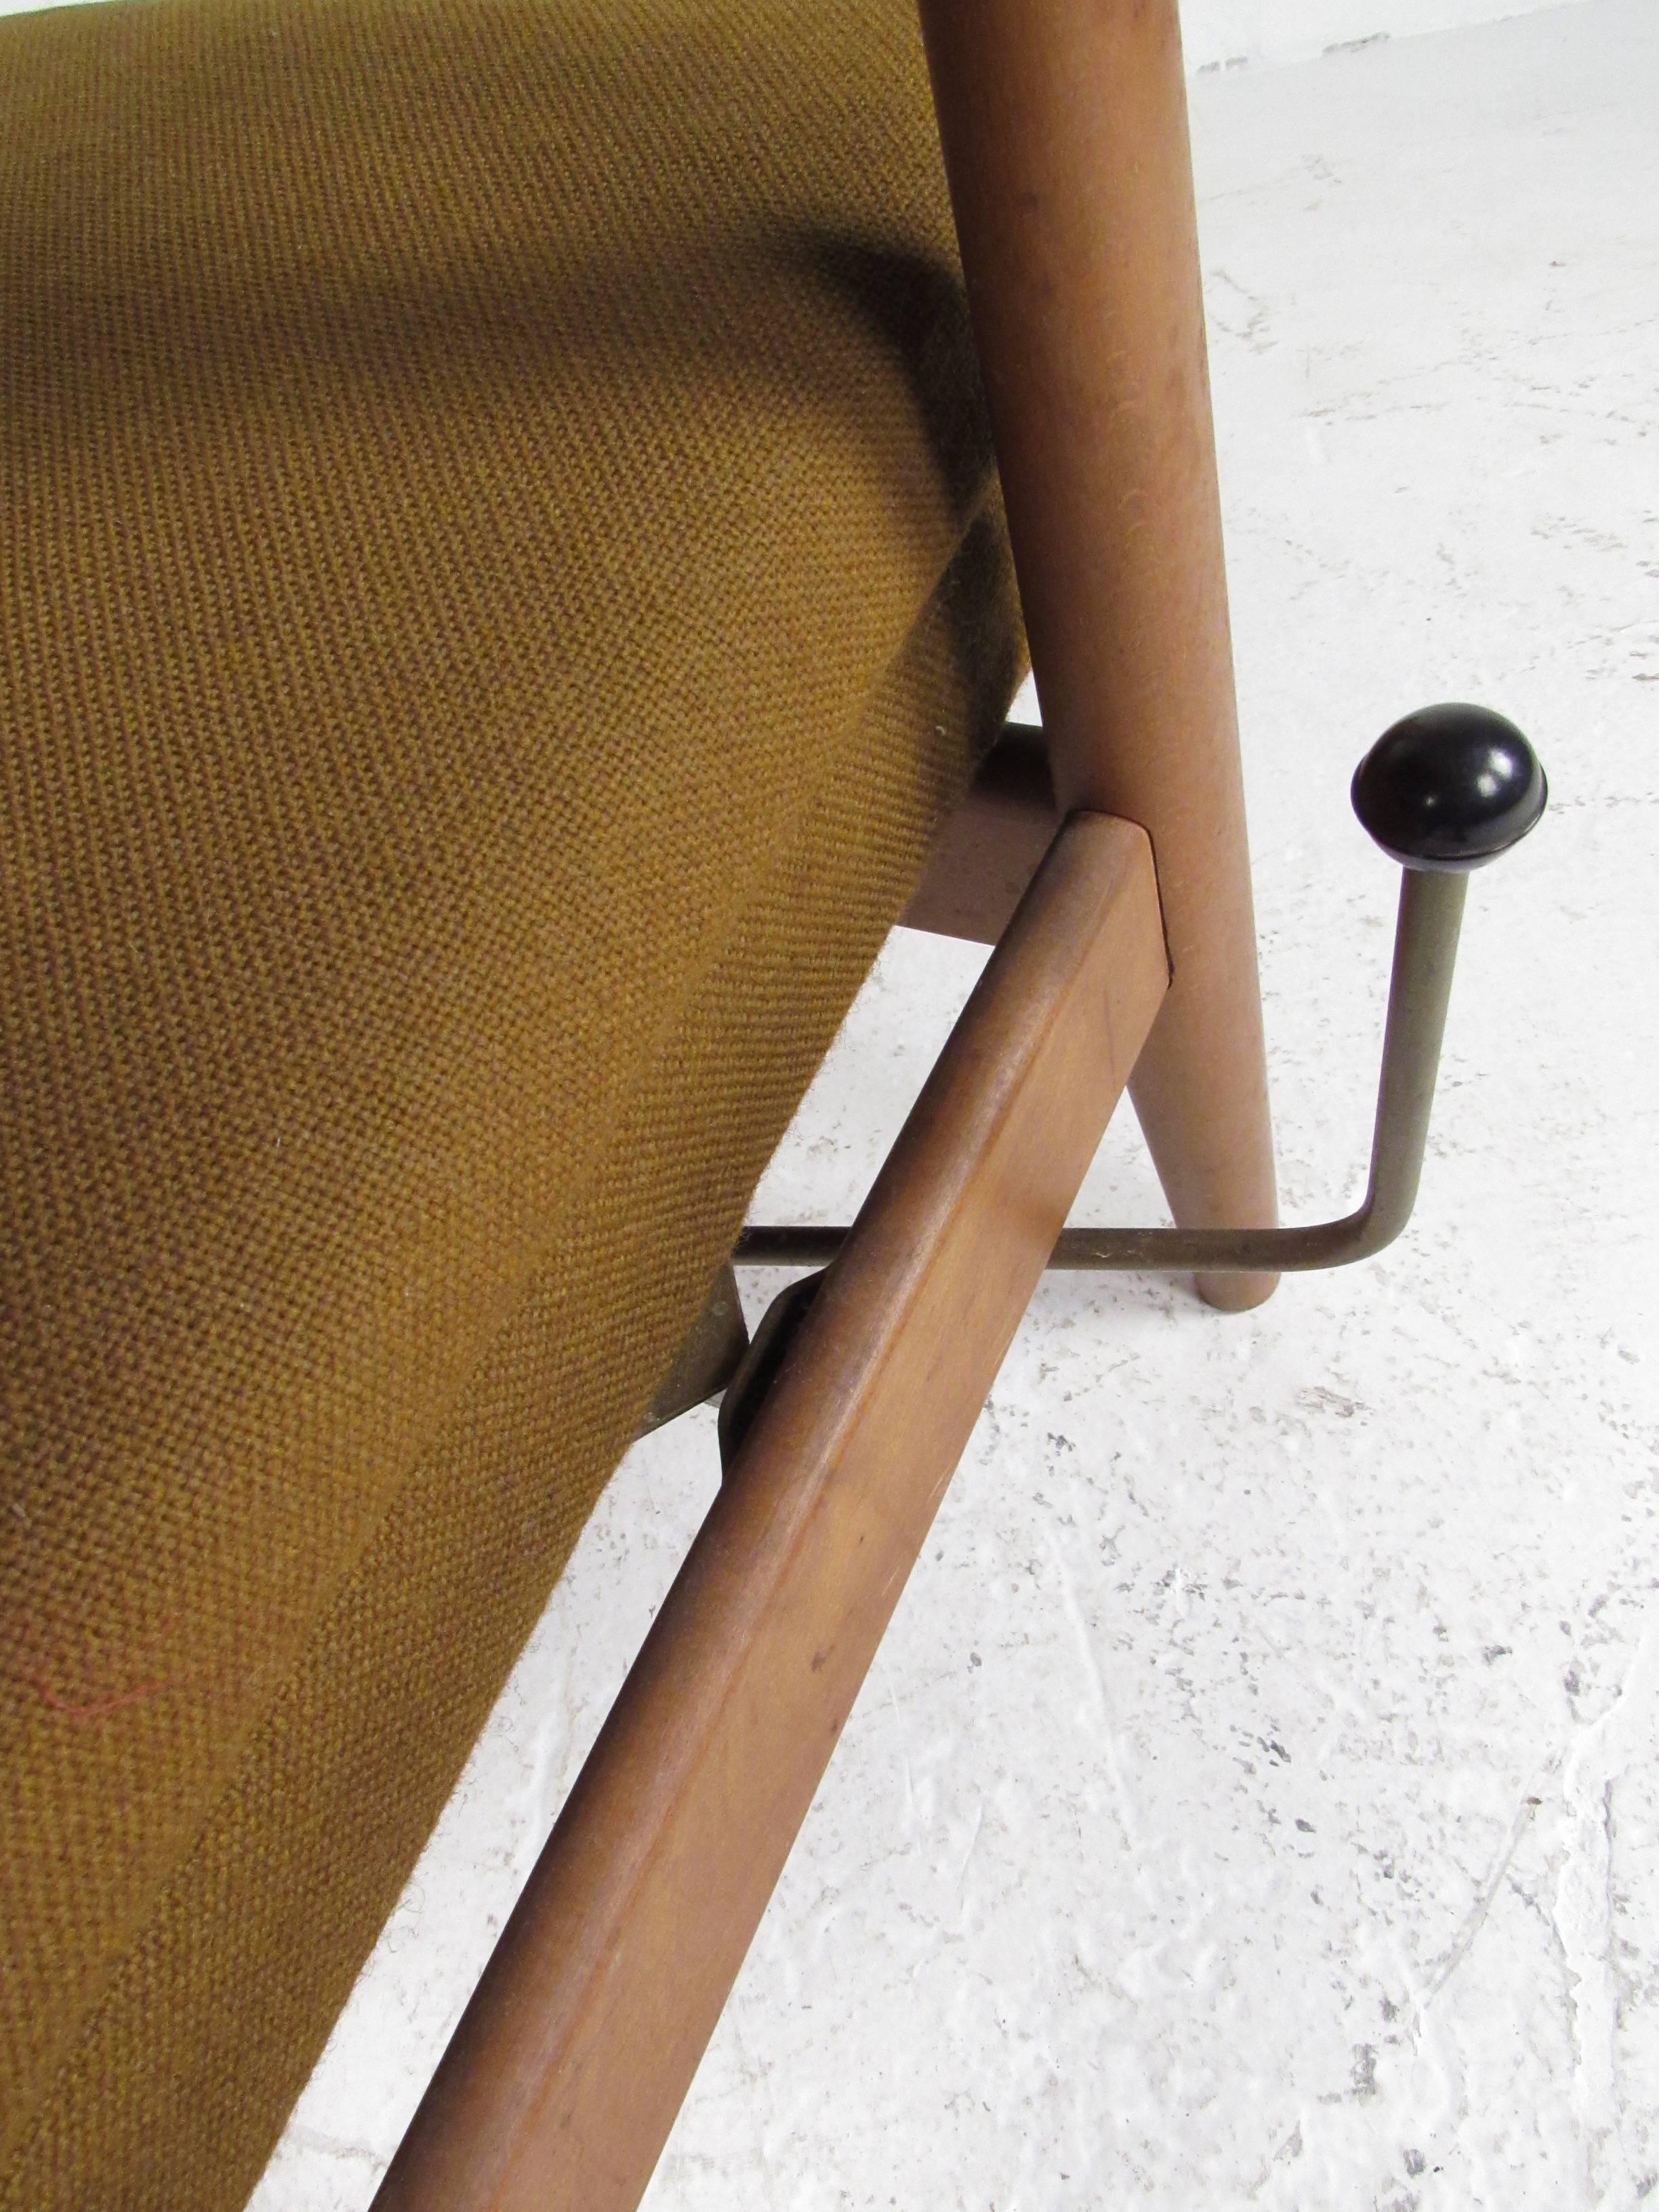 Grande chaise longue danoise moderne en vente 2